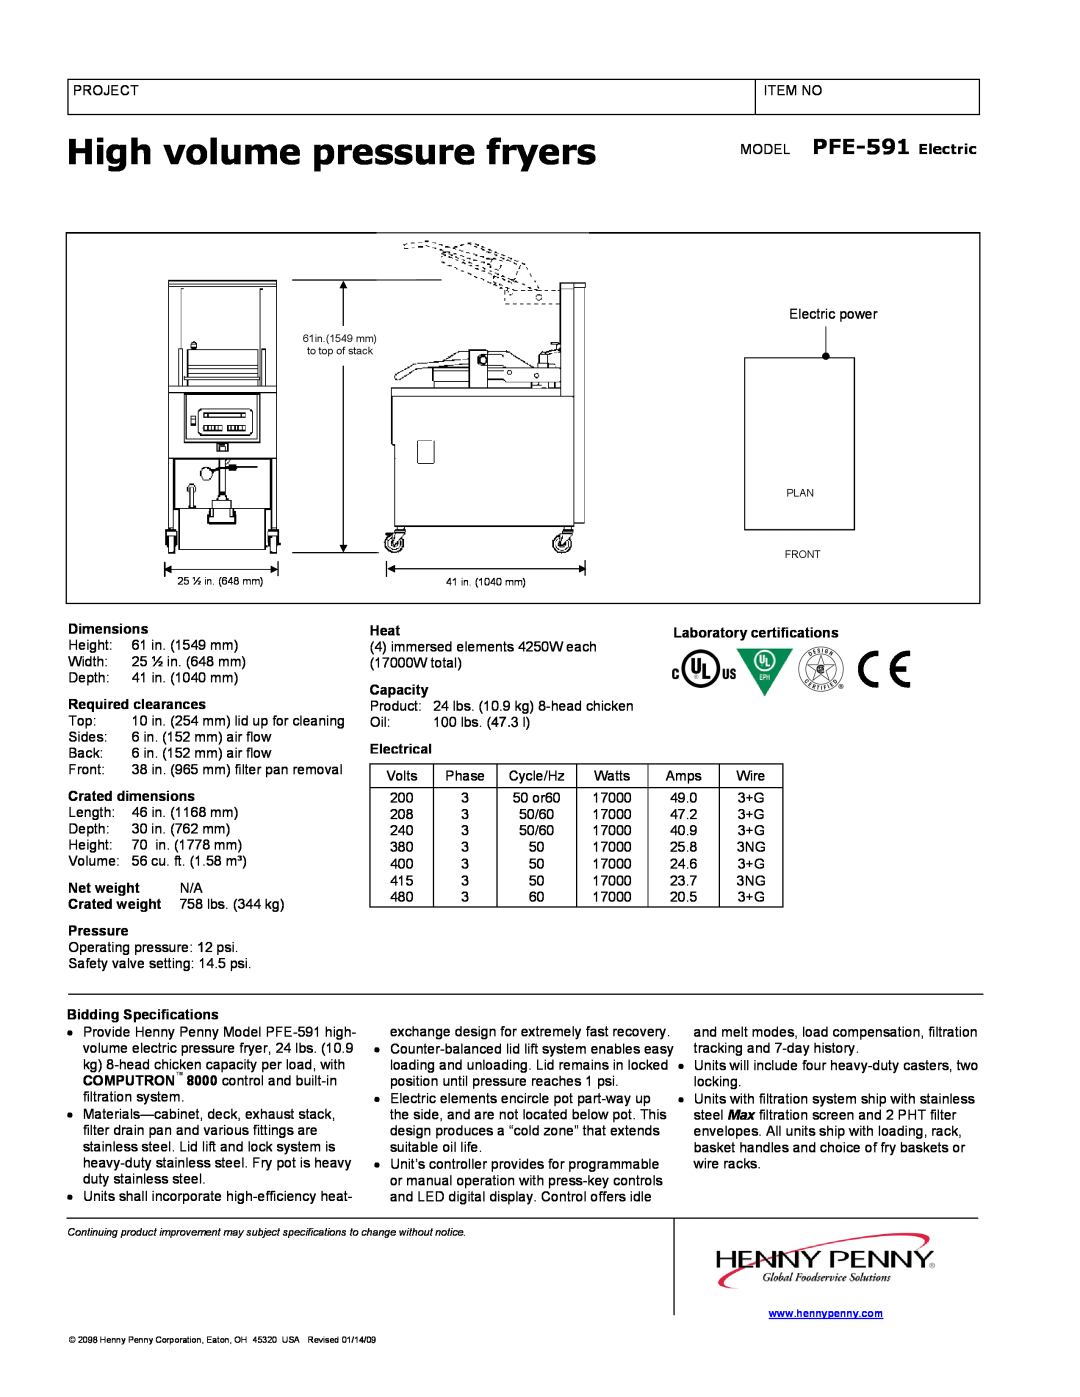 Henny Penny warranty High volume pressure fryers, MODEL PFE-591 Electric, Dimensions 